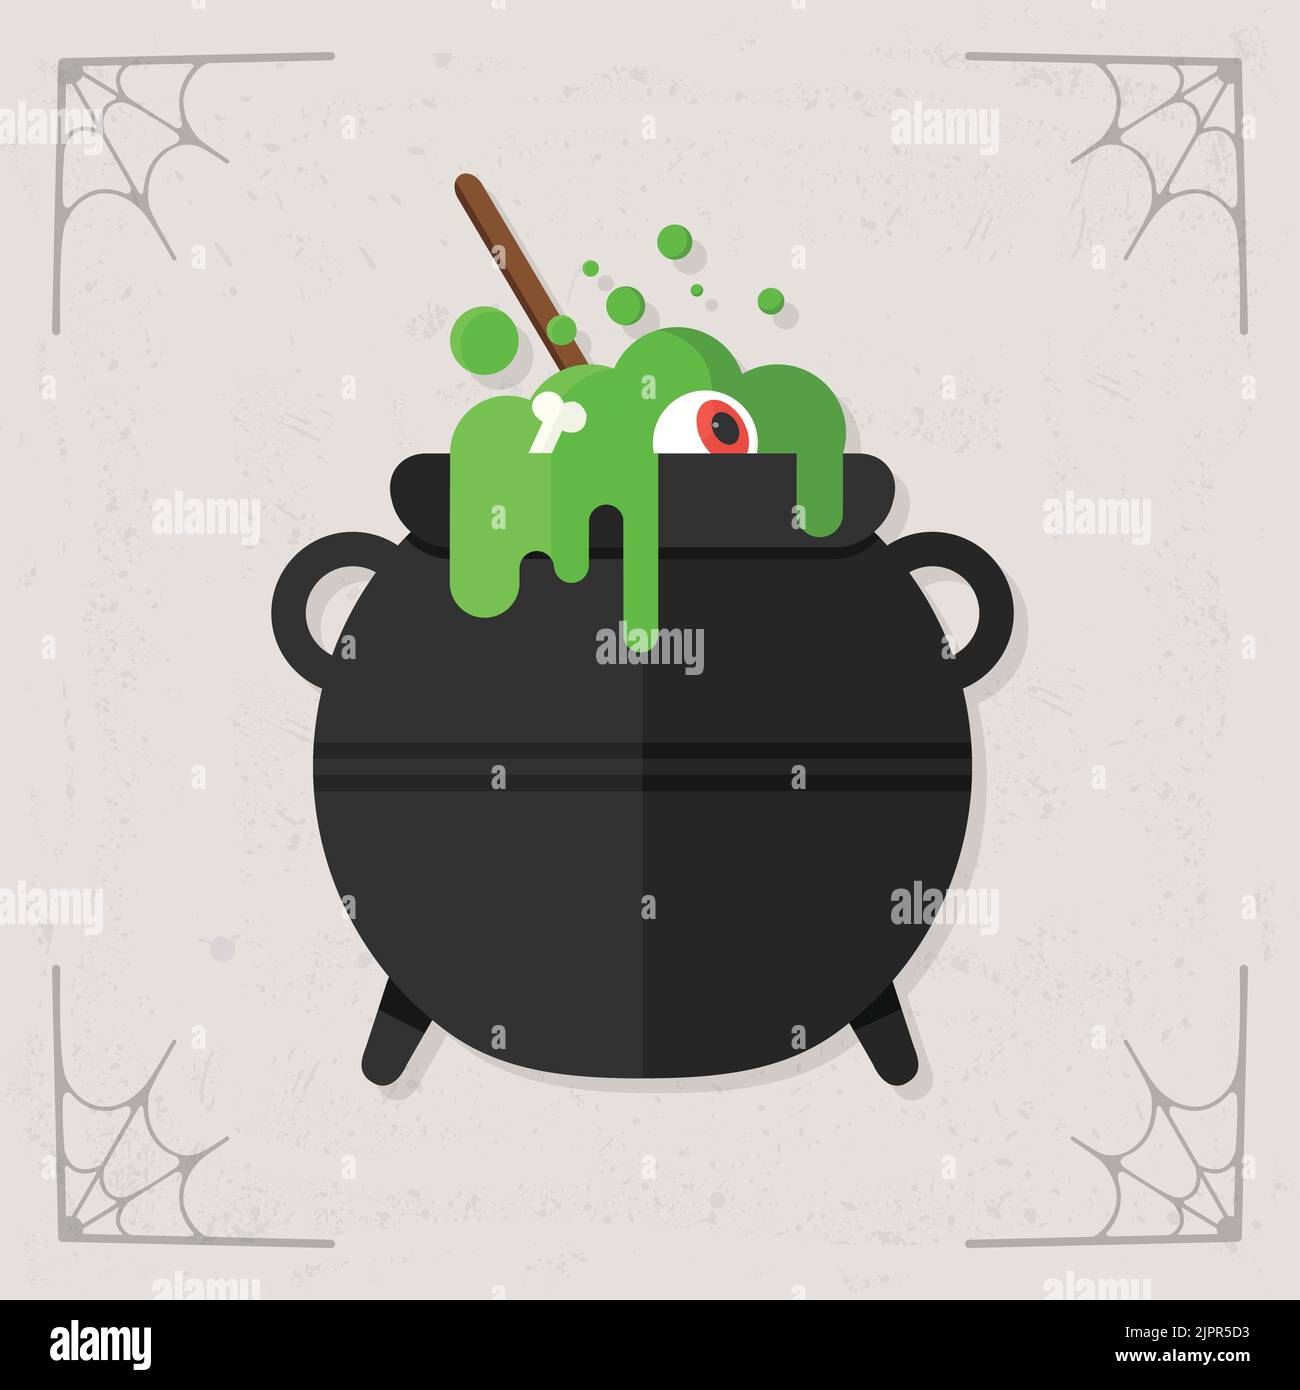 Cauldron icon. Witch cauldron with bubbling green liquid, bones and eye. Magic potion icon. Cute dark boiling cauldron. Halloween illustration Stock Vector